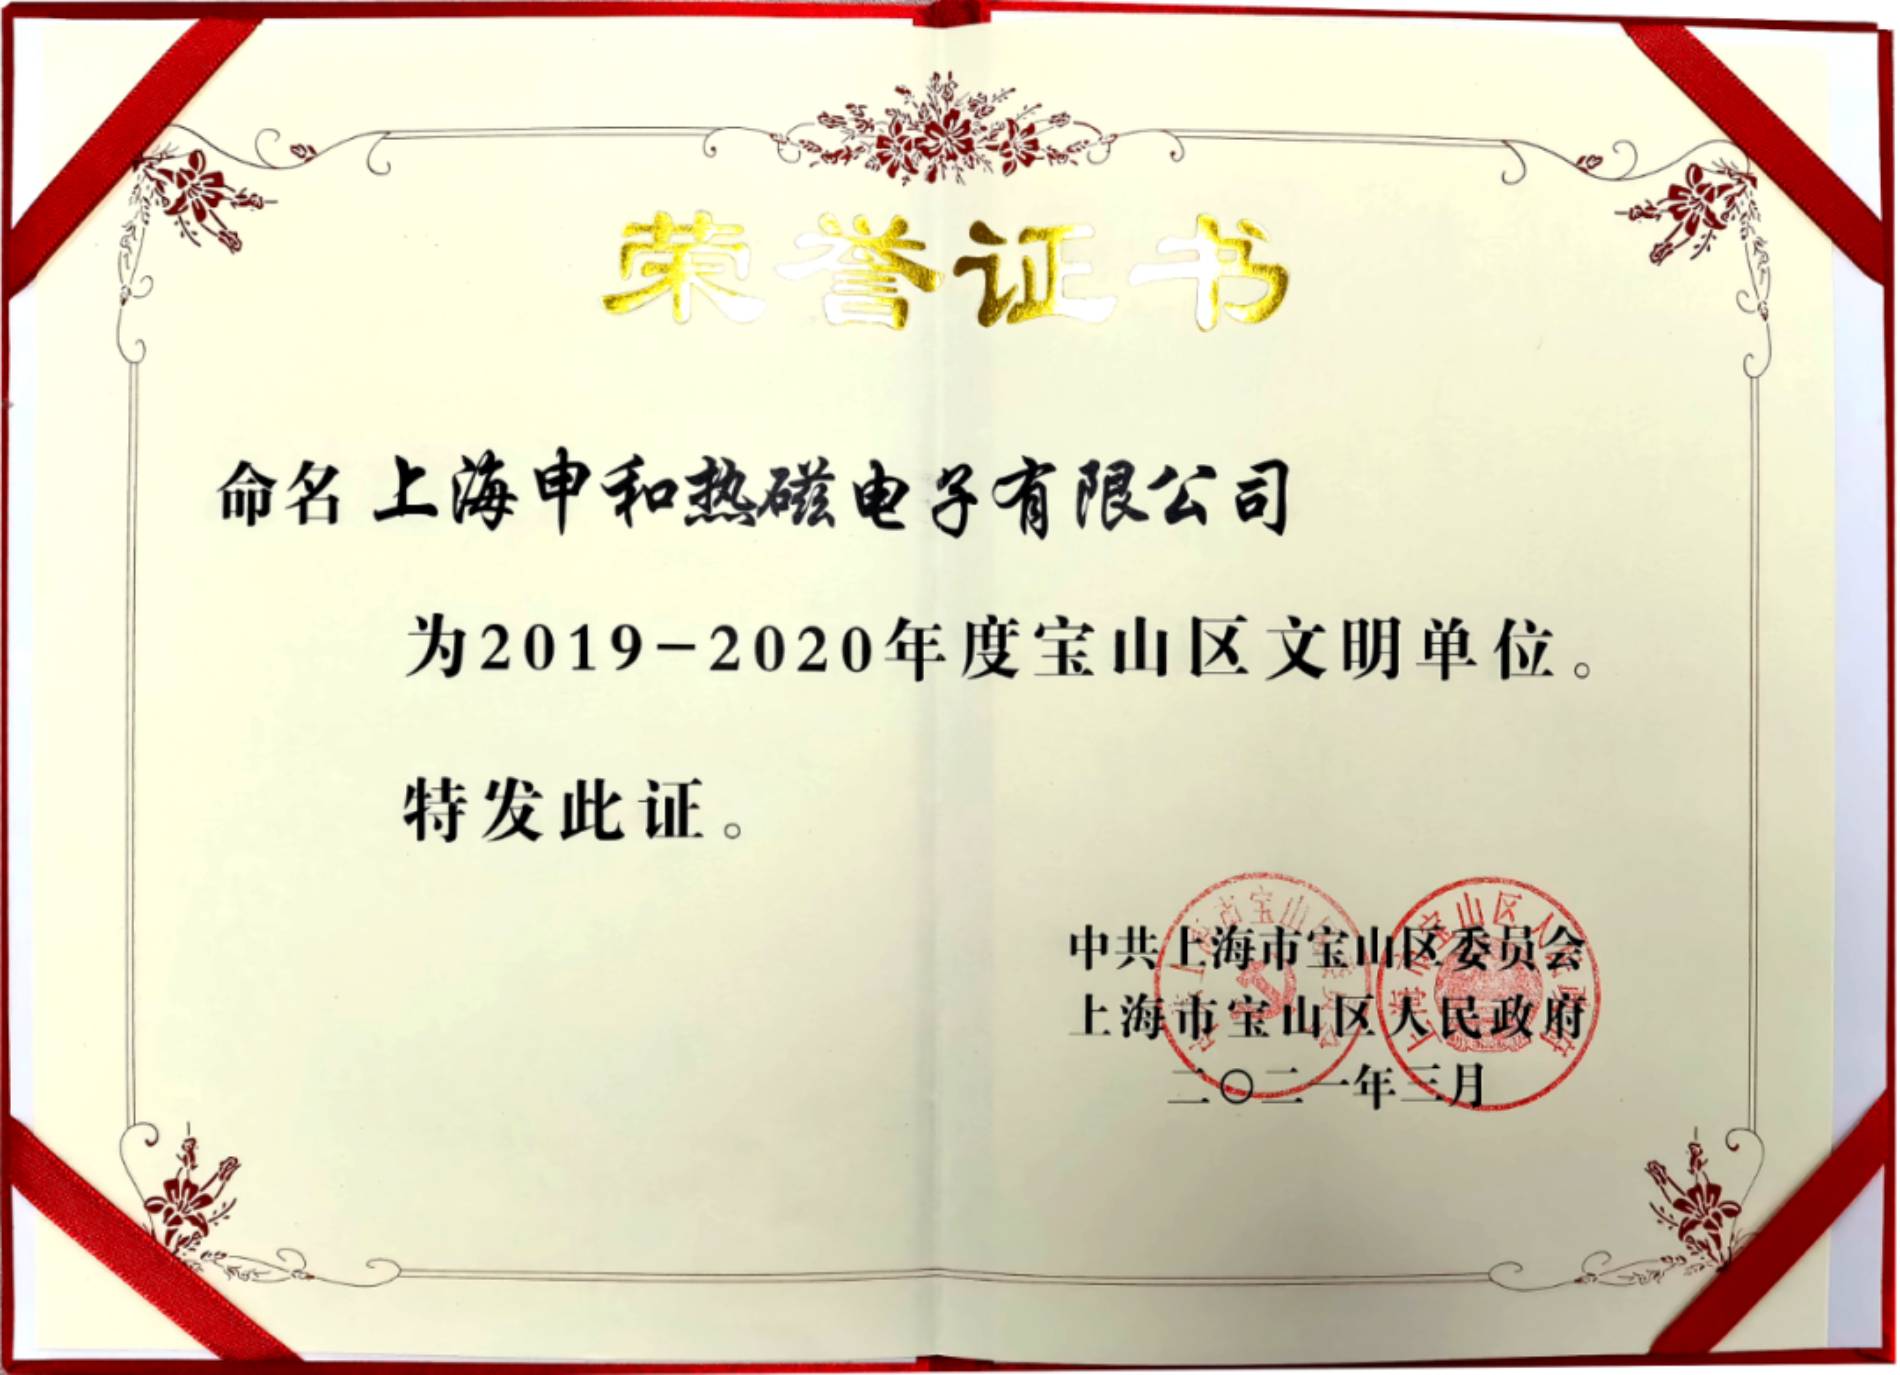 Shanghai Shenhe Thermo-Magnetics Electronics?Co.,Ltd. won the honor of Baoshan civilized unit in 2019-2020